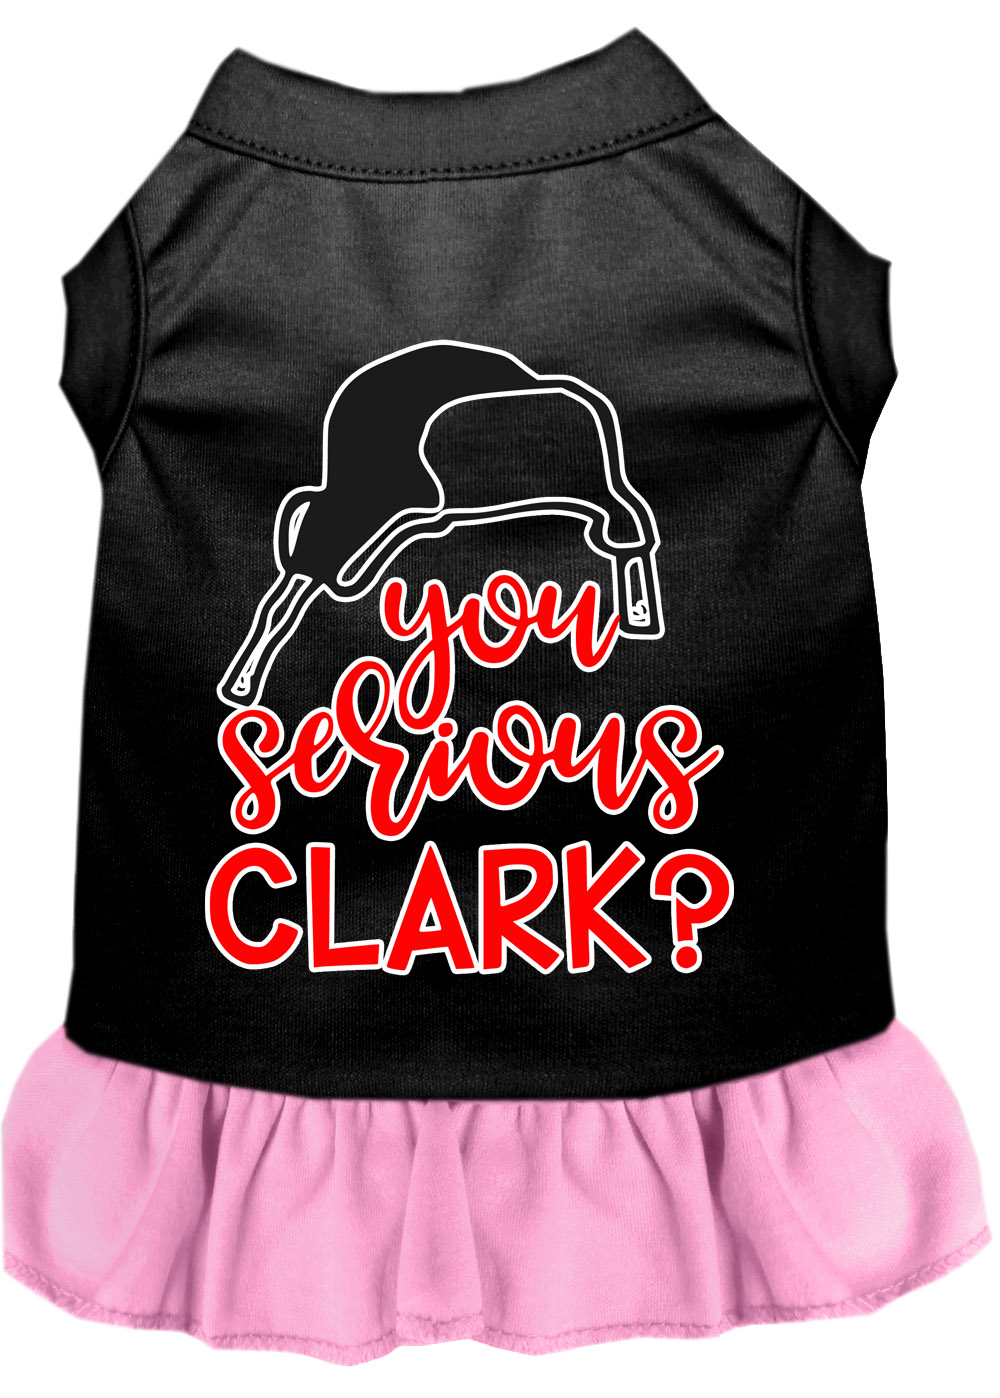 You Serious Clark? Screen Print Dog Dress Black with Light Pink XS